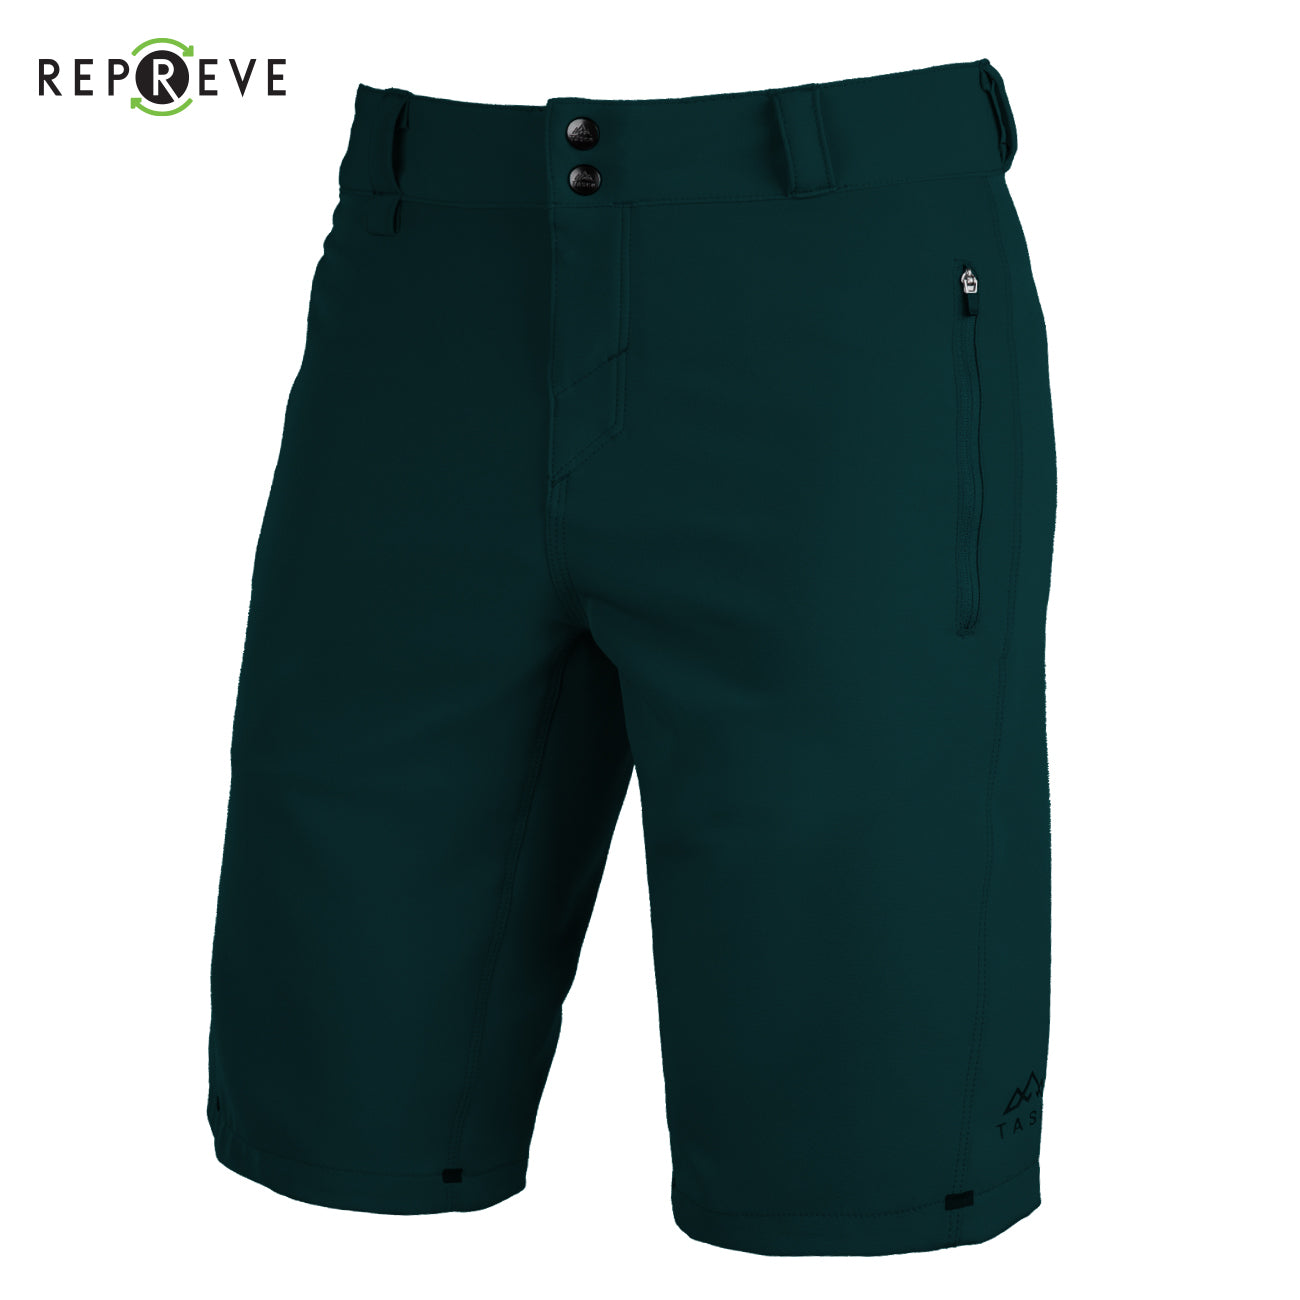 TASCO MTB Scout Shorts REPREVE - Emerald